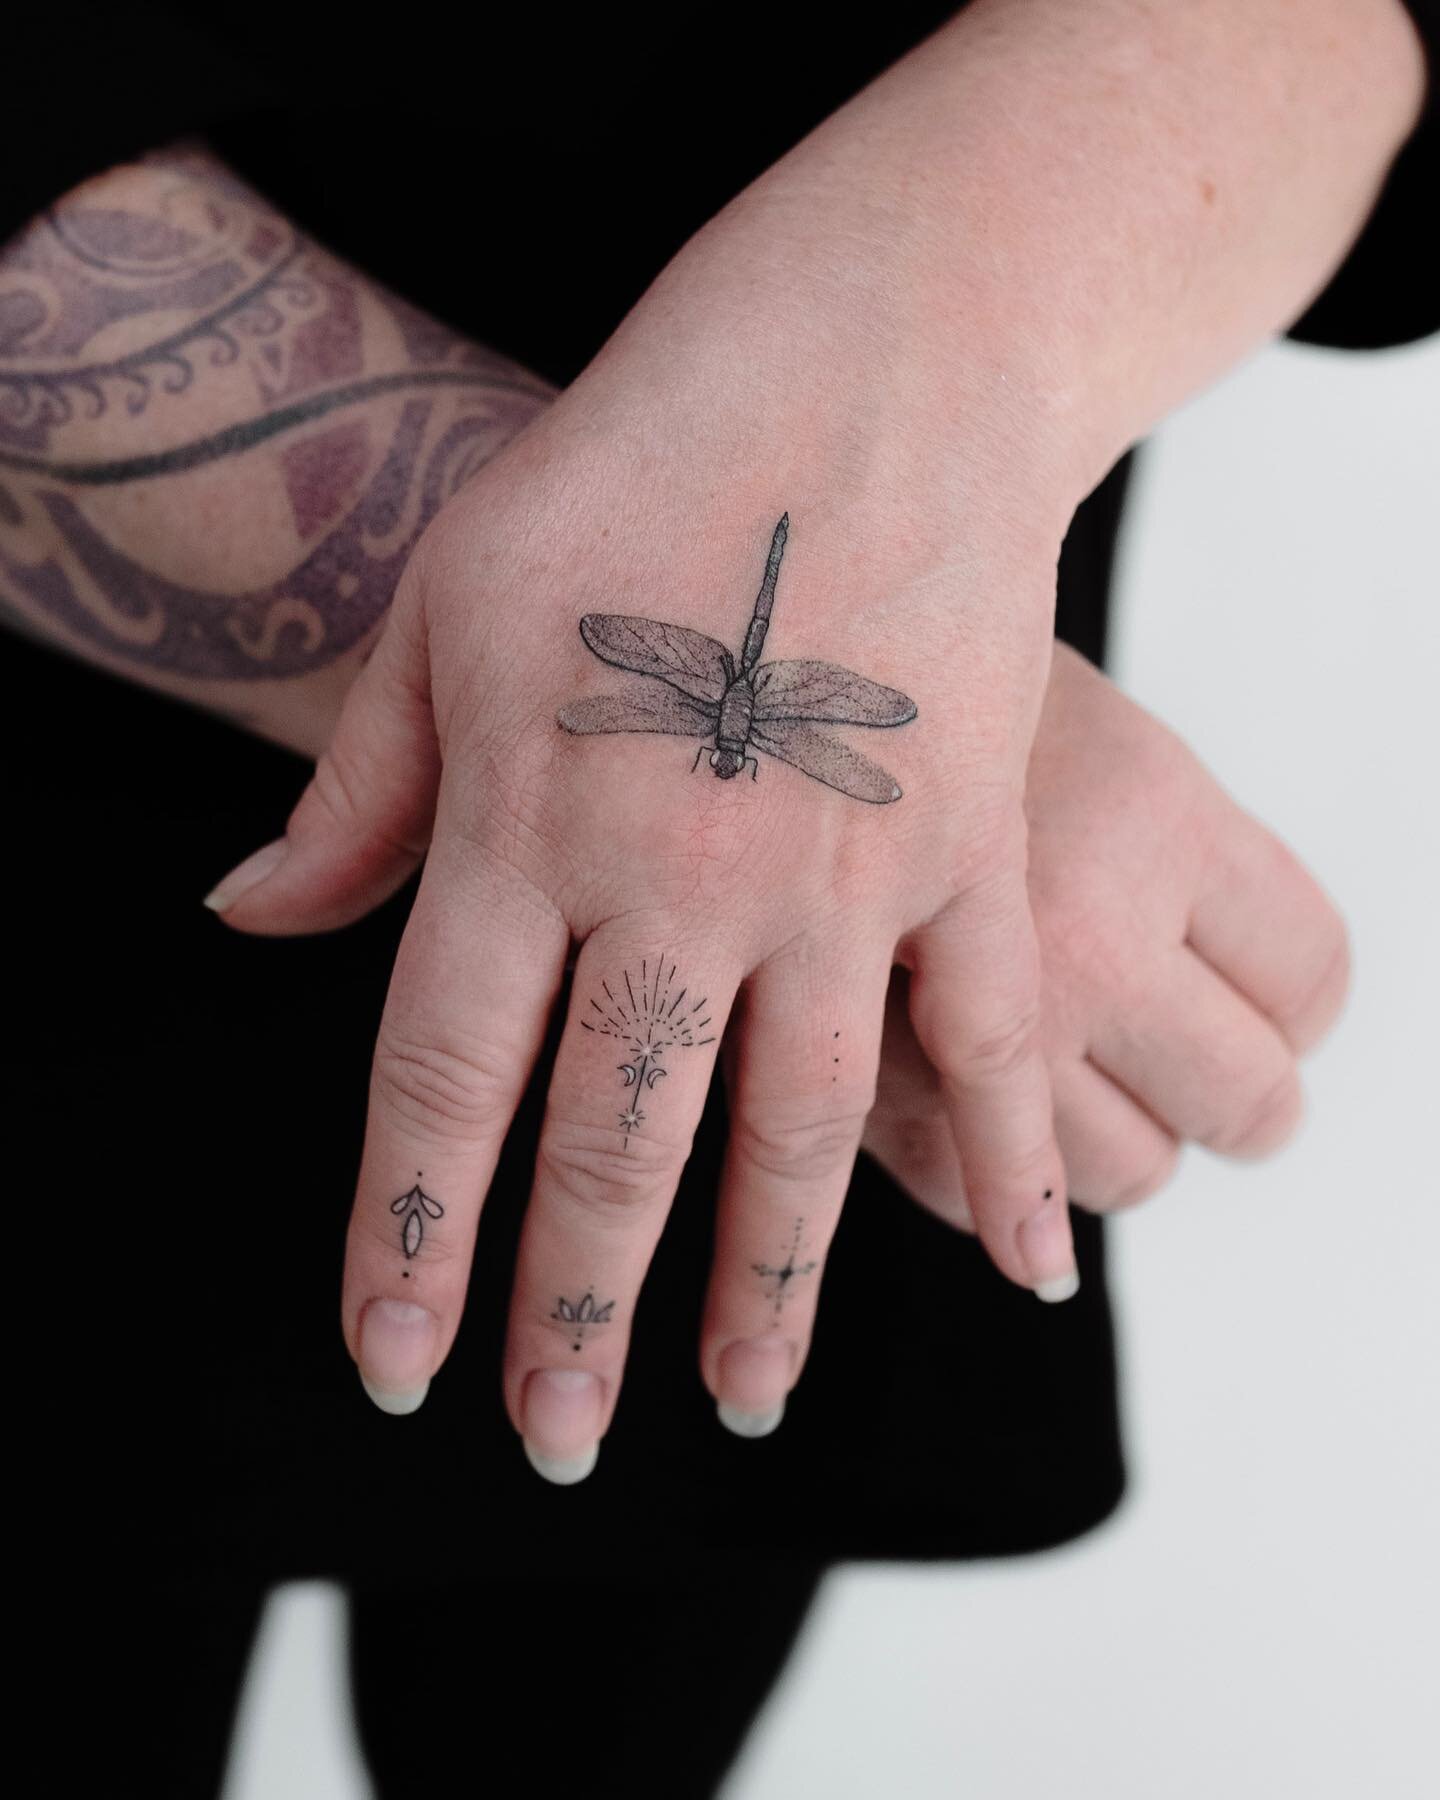 Hands *booking form in bio**
.
.
.
.
.
.
.
.
.

.
.
.

#tattoo #tattoos #ink #inked #art #tattooartist #tattooart #tattooed #tattoolife #tattooideas #love #artist #blackwork #instagood #tattoodesign #tatuagem #tattooing #tattooist #blackandgreytattoo